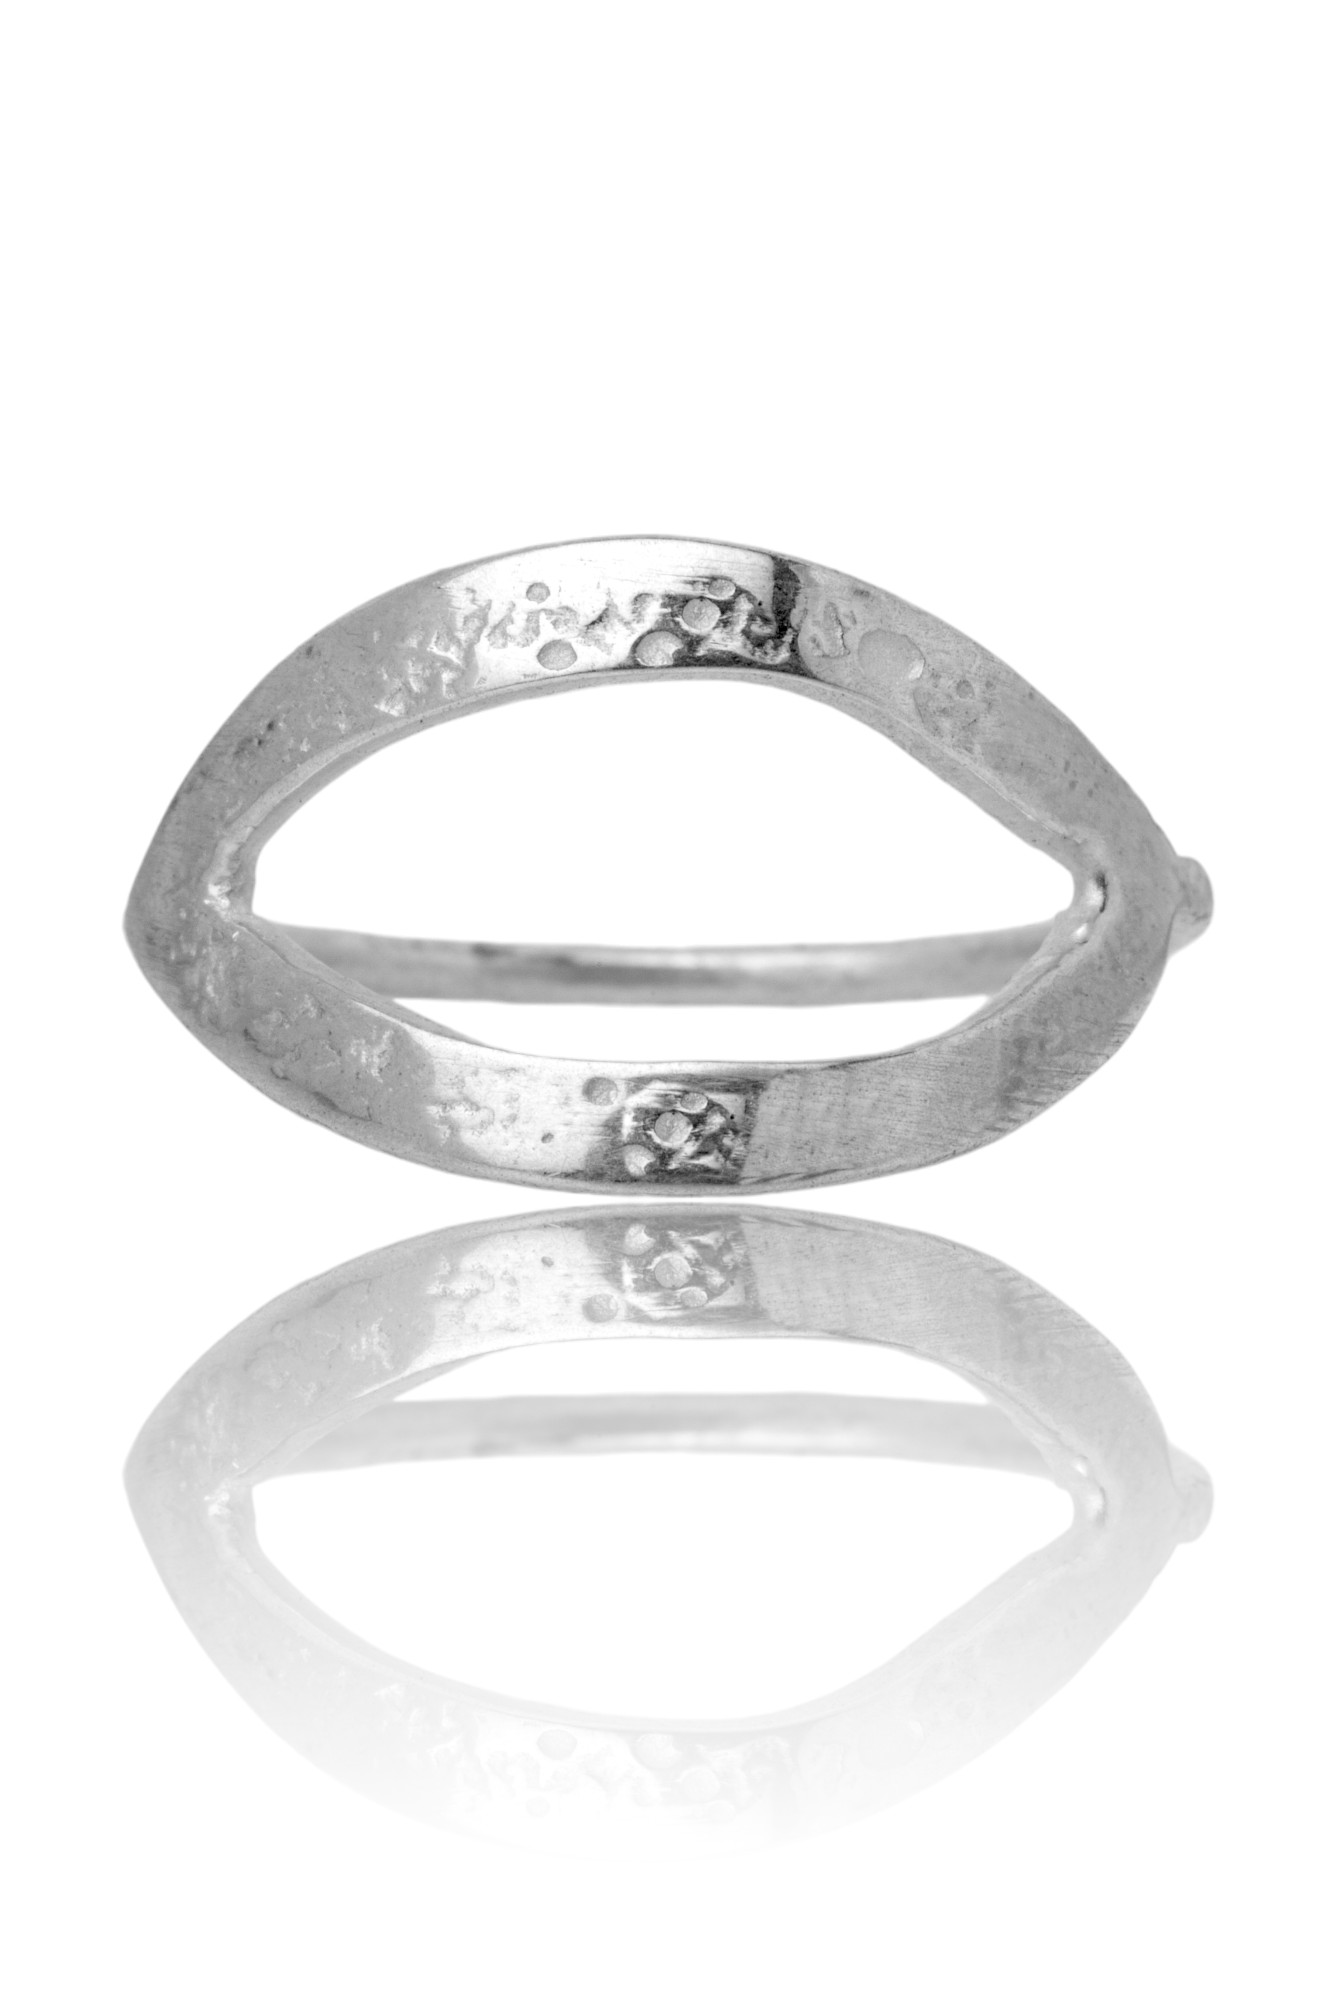 Oval textured handmade minimal silver ring main